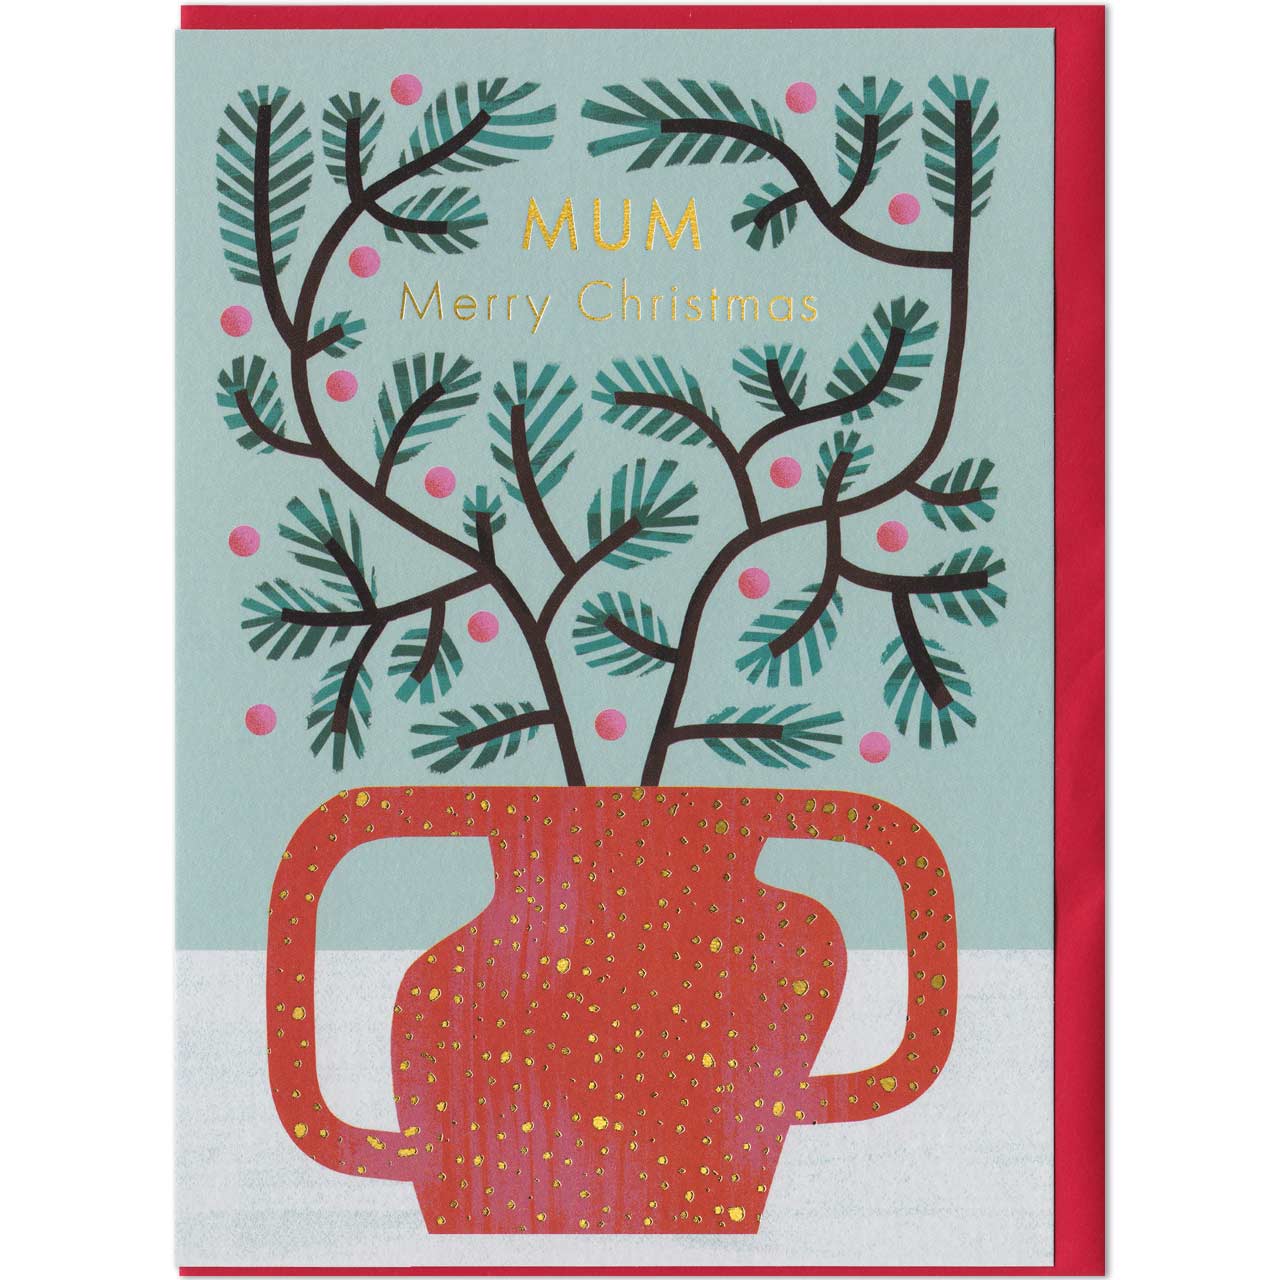 Mum Merry Christmas Vase Gold Foil Card